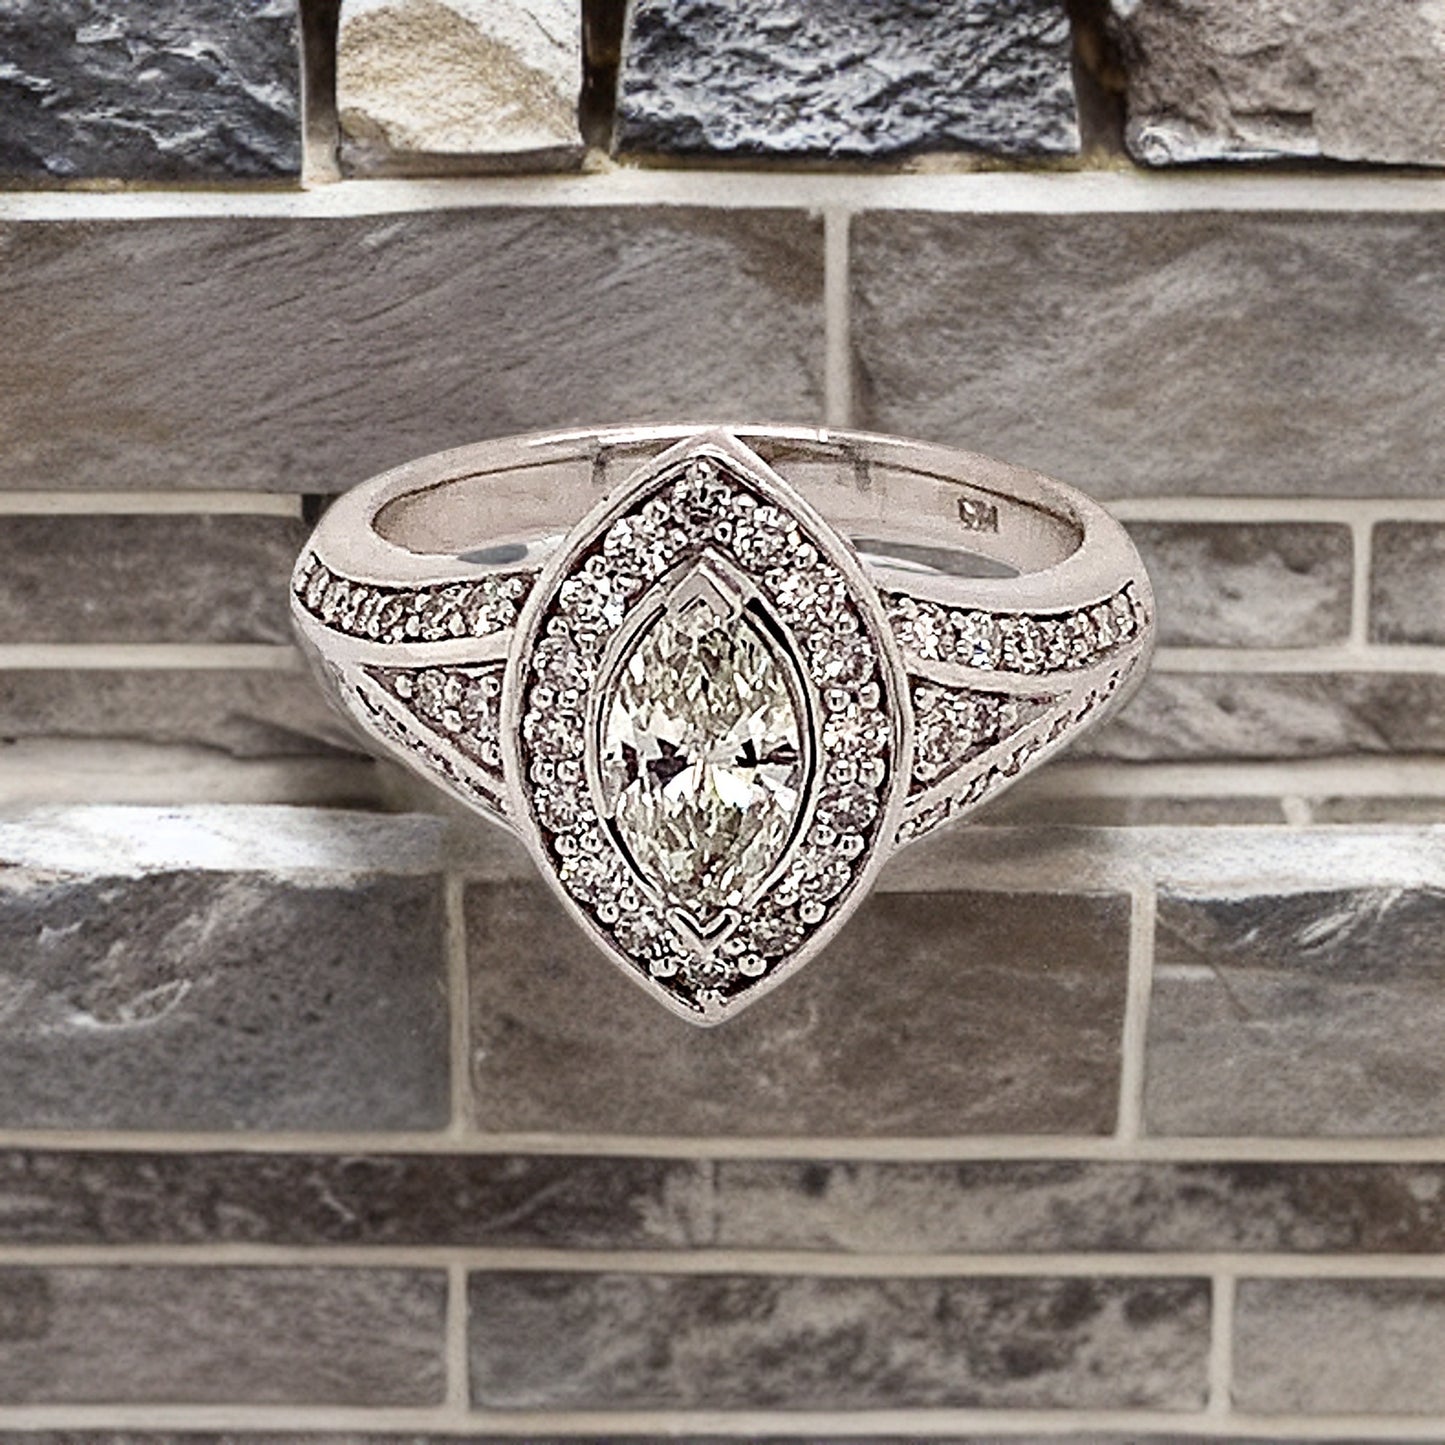 Diamond Ring Size 6.5 14k White Gold 0.45 TCW 4.88g Certified $5,950 120603